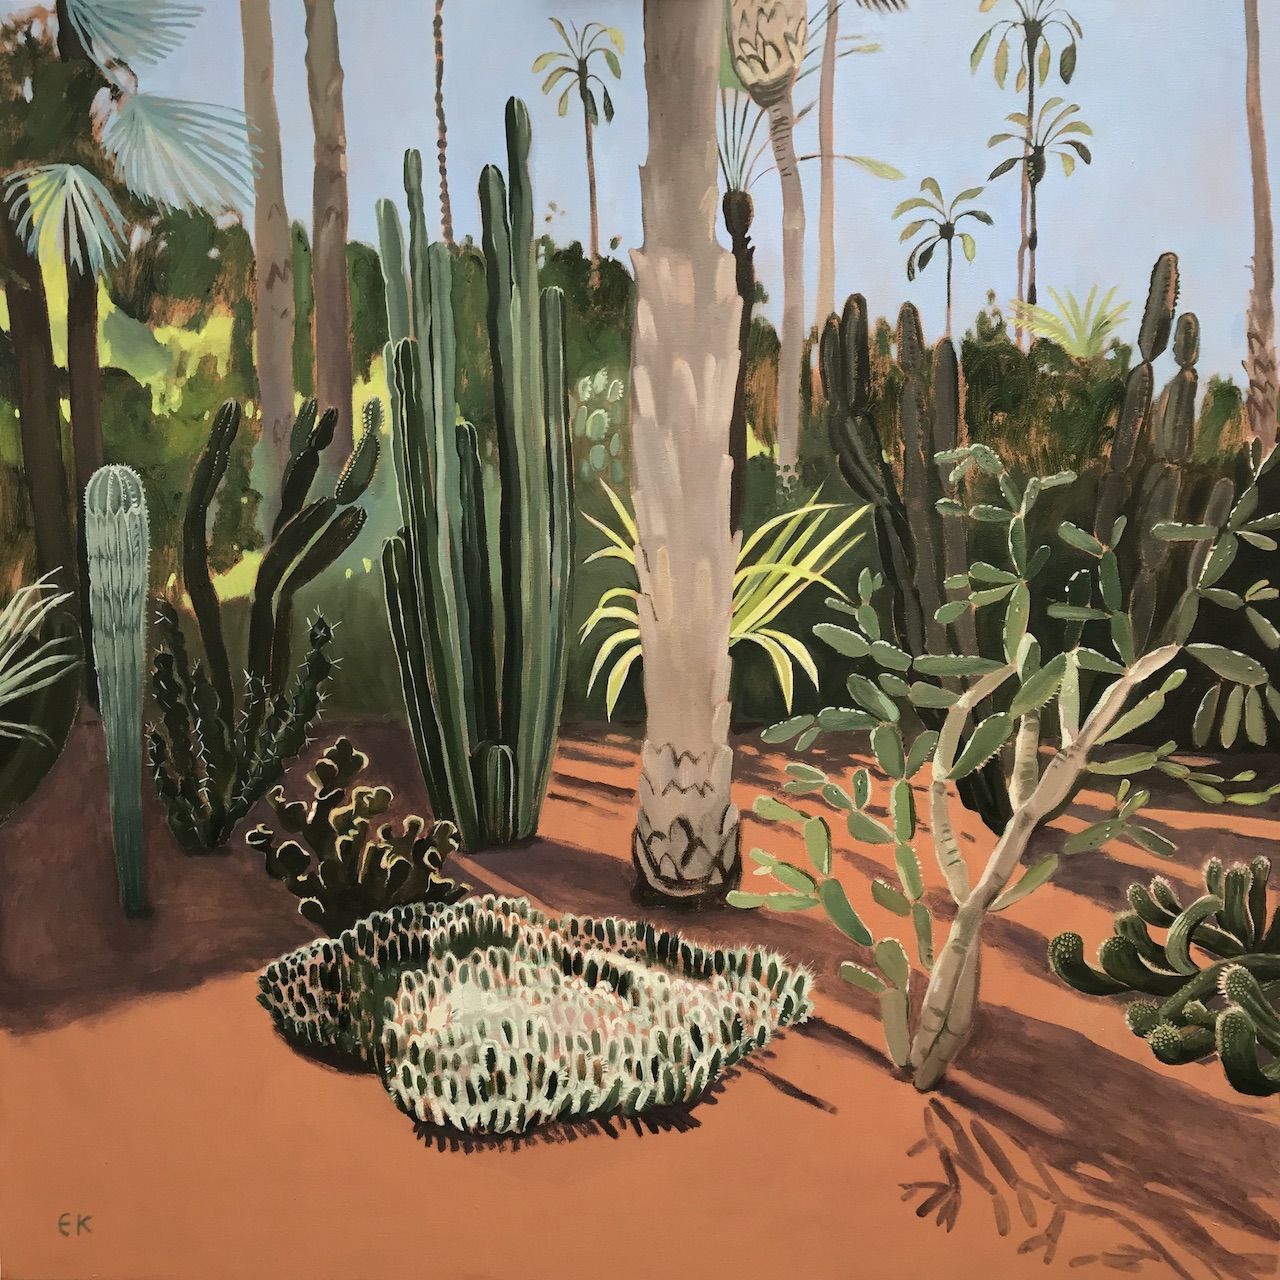 Cacti Varieties and Palm Tree, Marjorelle Gardens, Morocco by Elaine Kazimierczuk